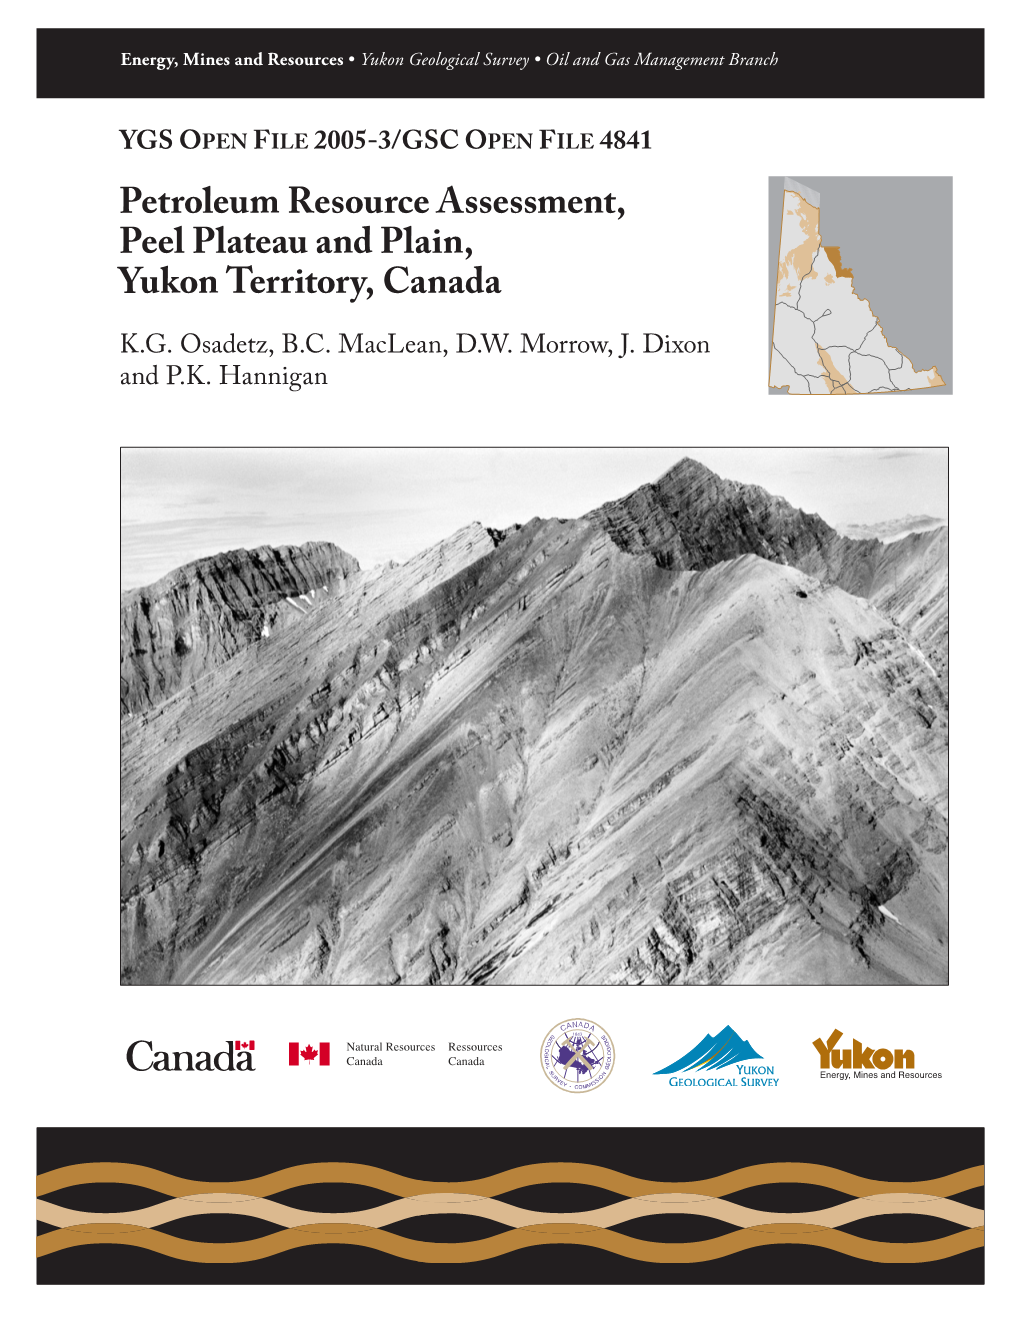 Petroleum Resource Assessment, Peel Plateau and Plain, Yukon Territory, Canada K.G